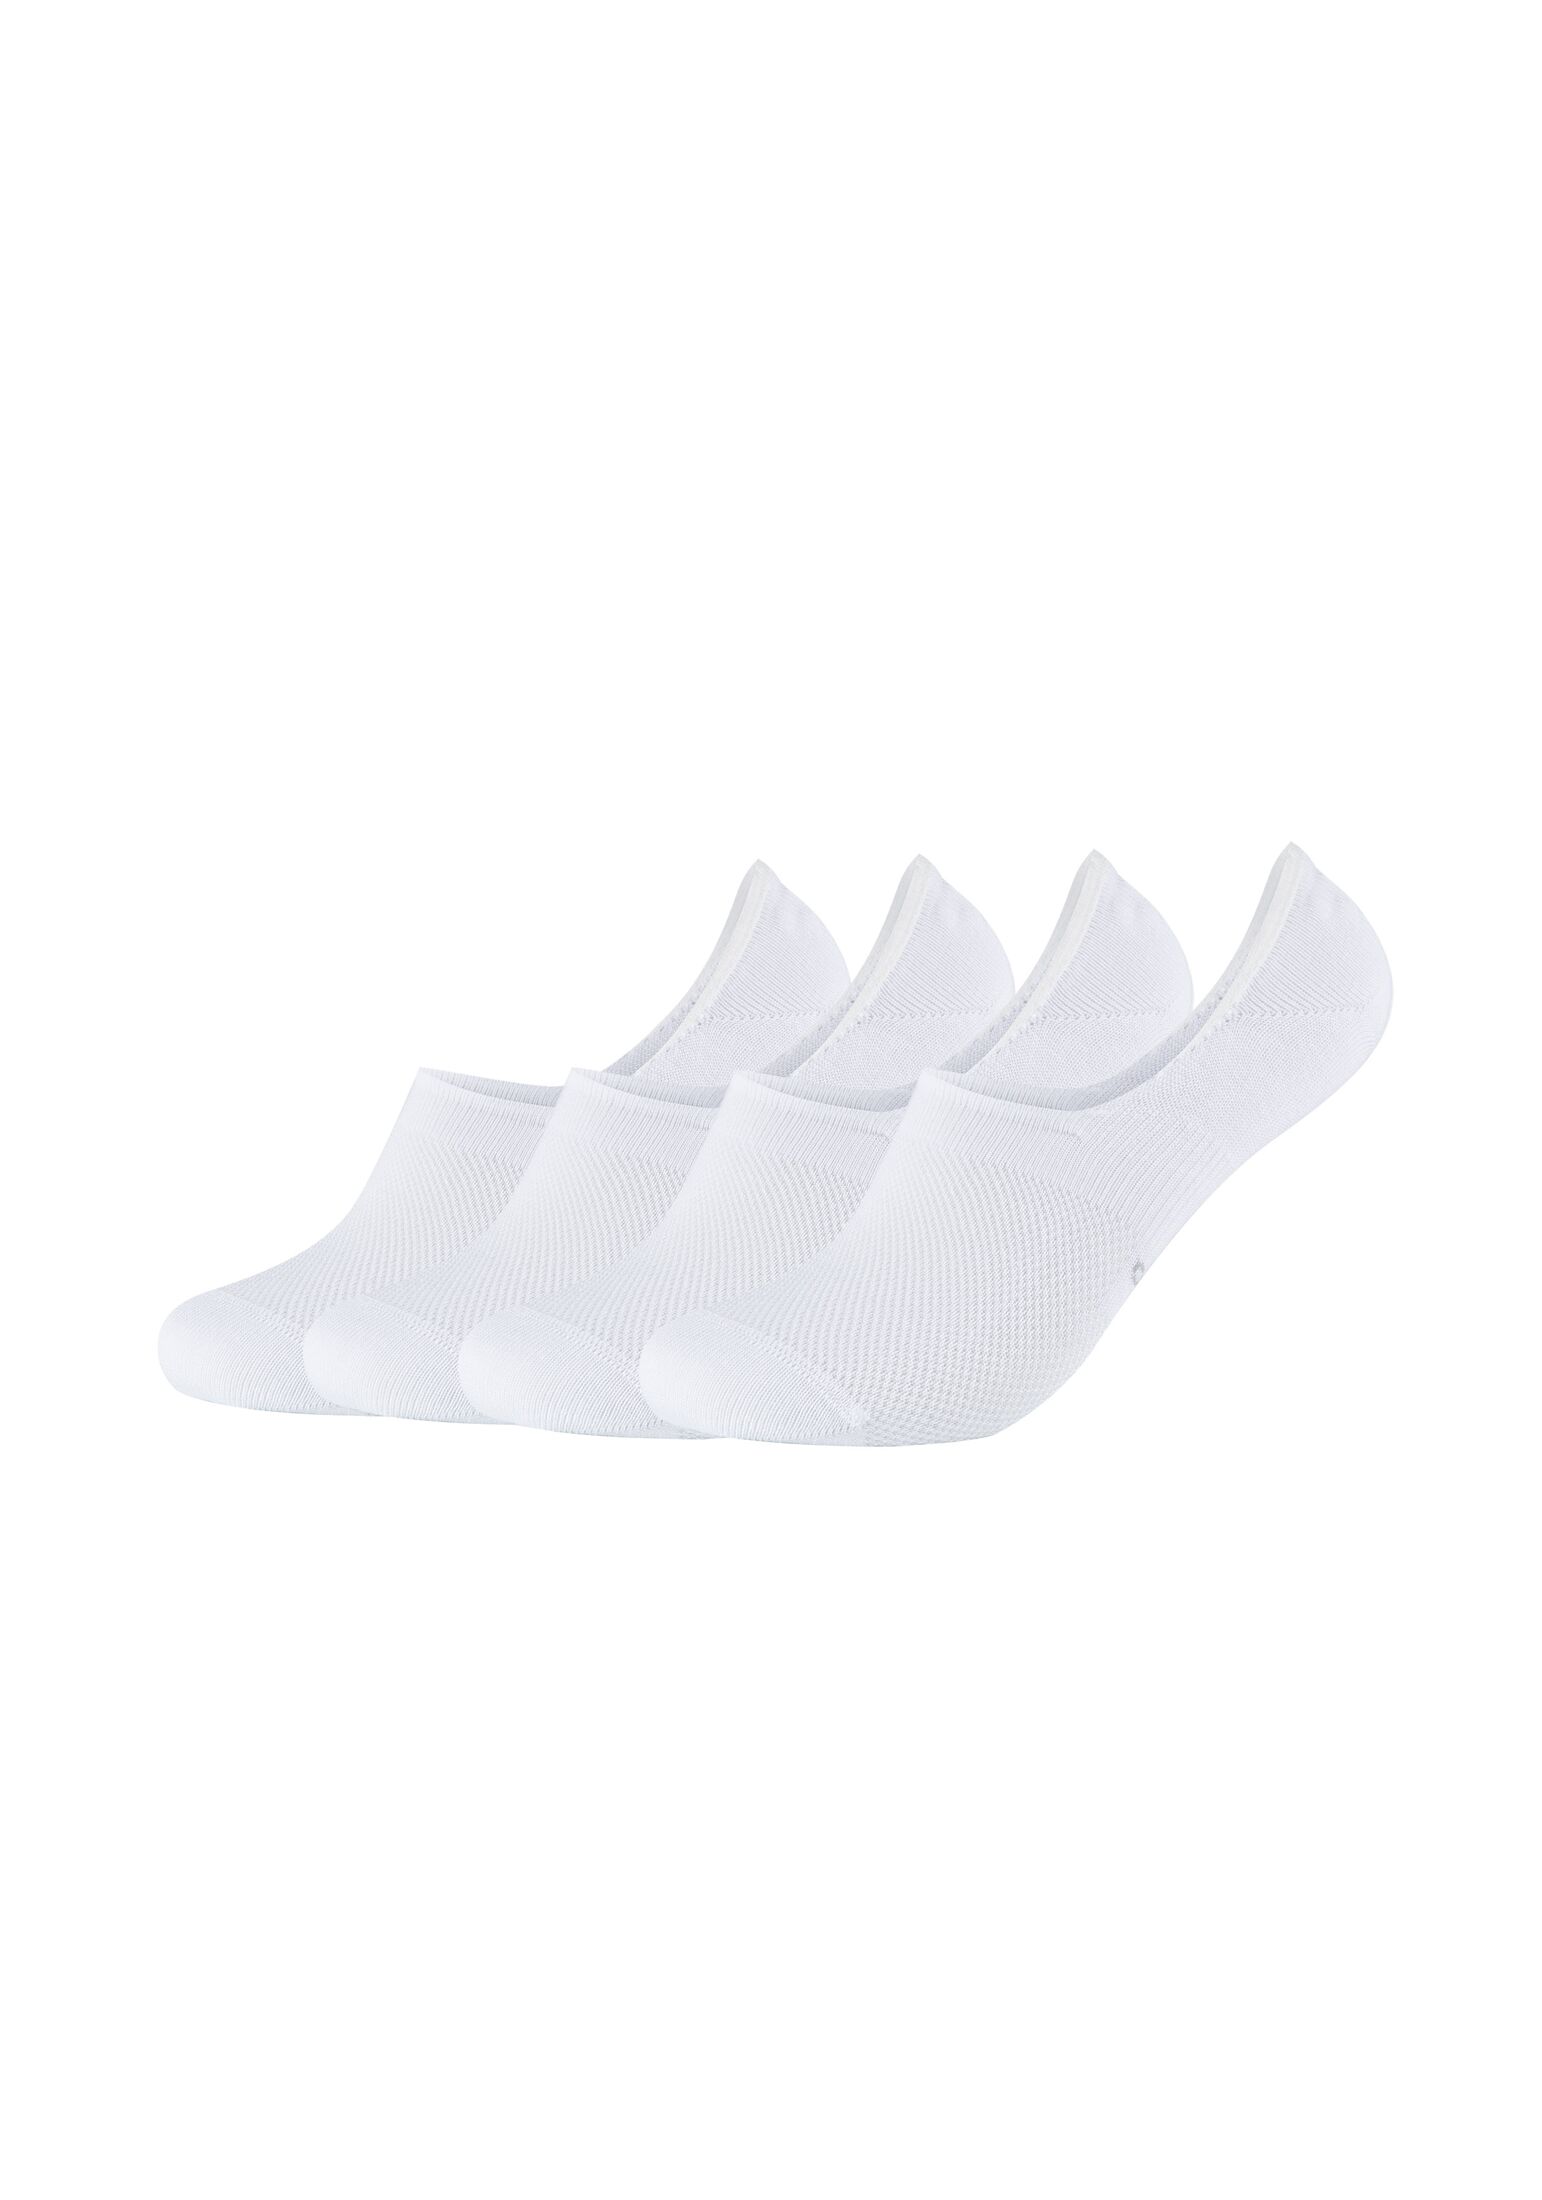 Носки camano Füßlinge 4 шт comfort, белый